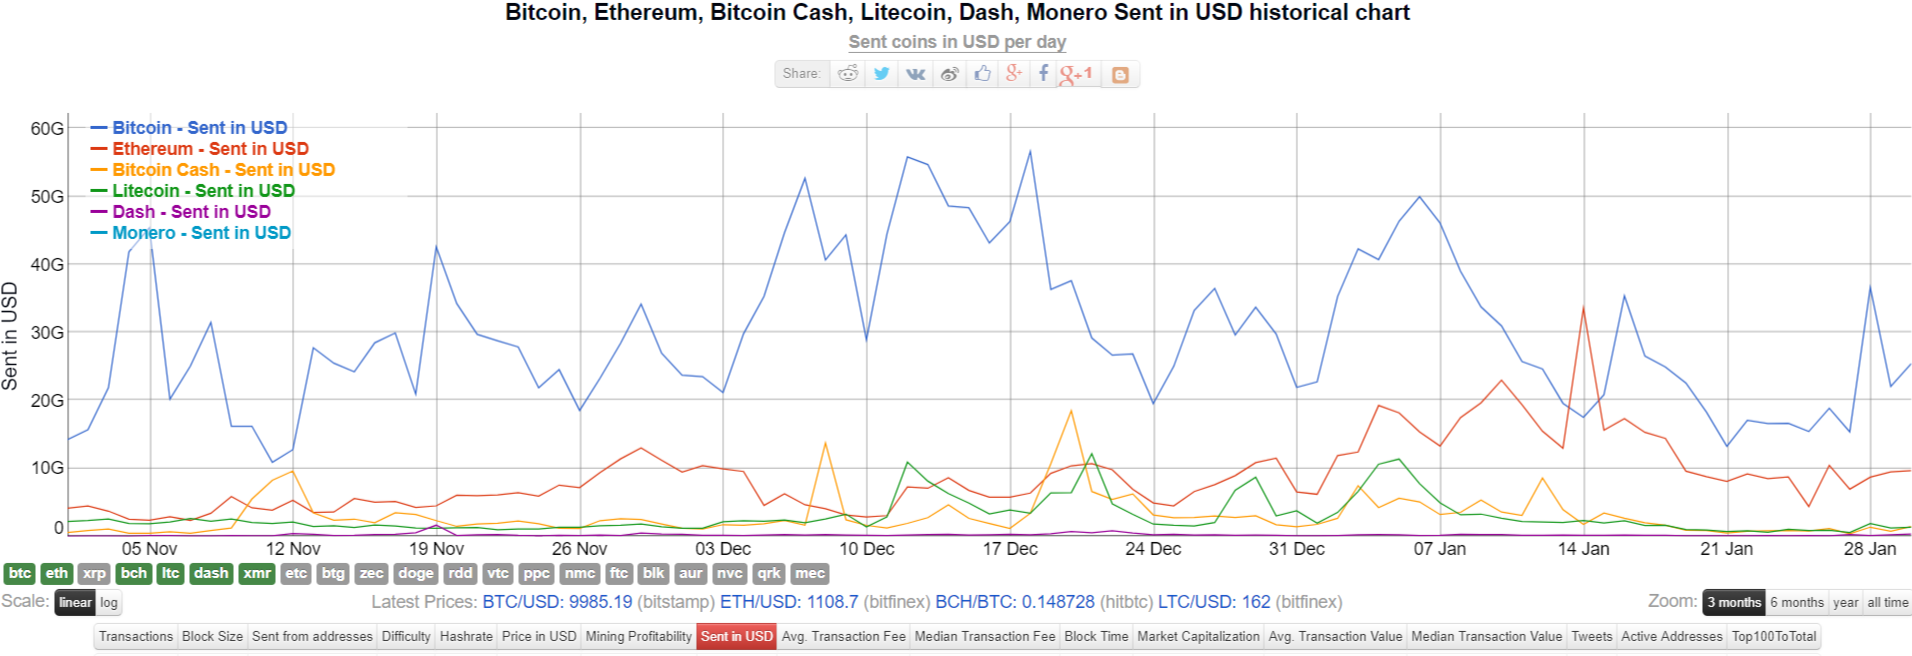 Bitcoin Miner Fee Chart